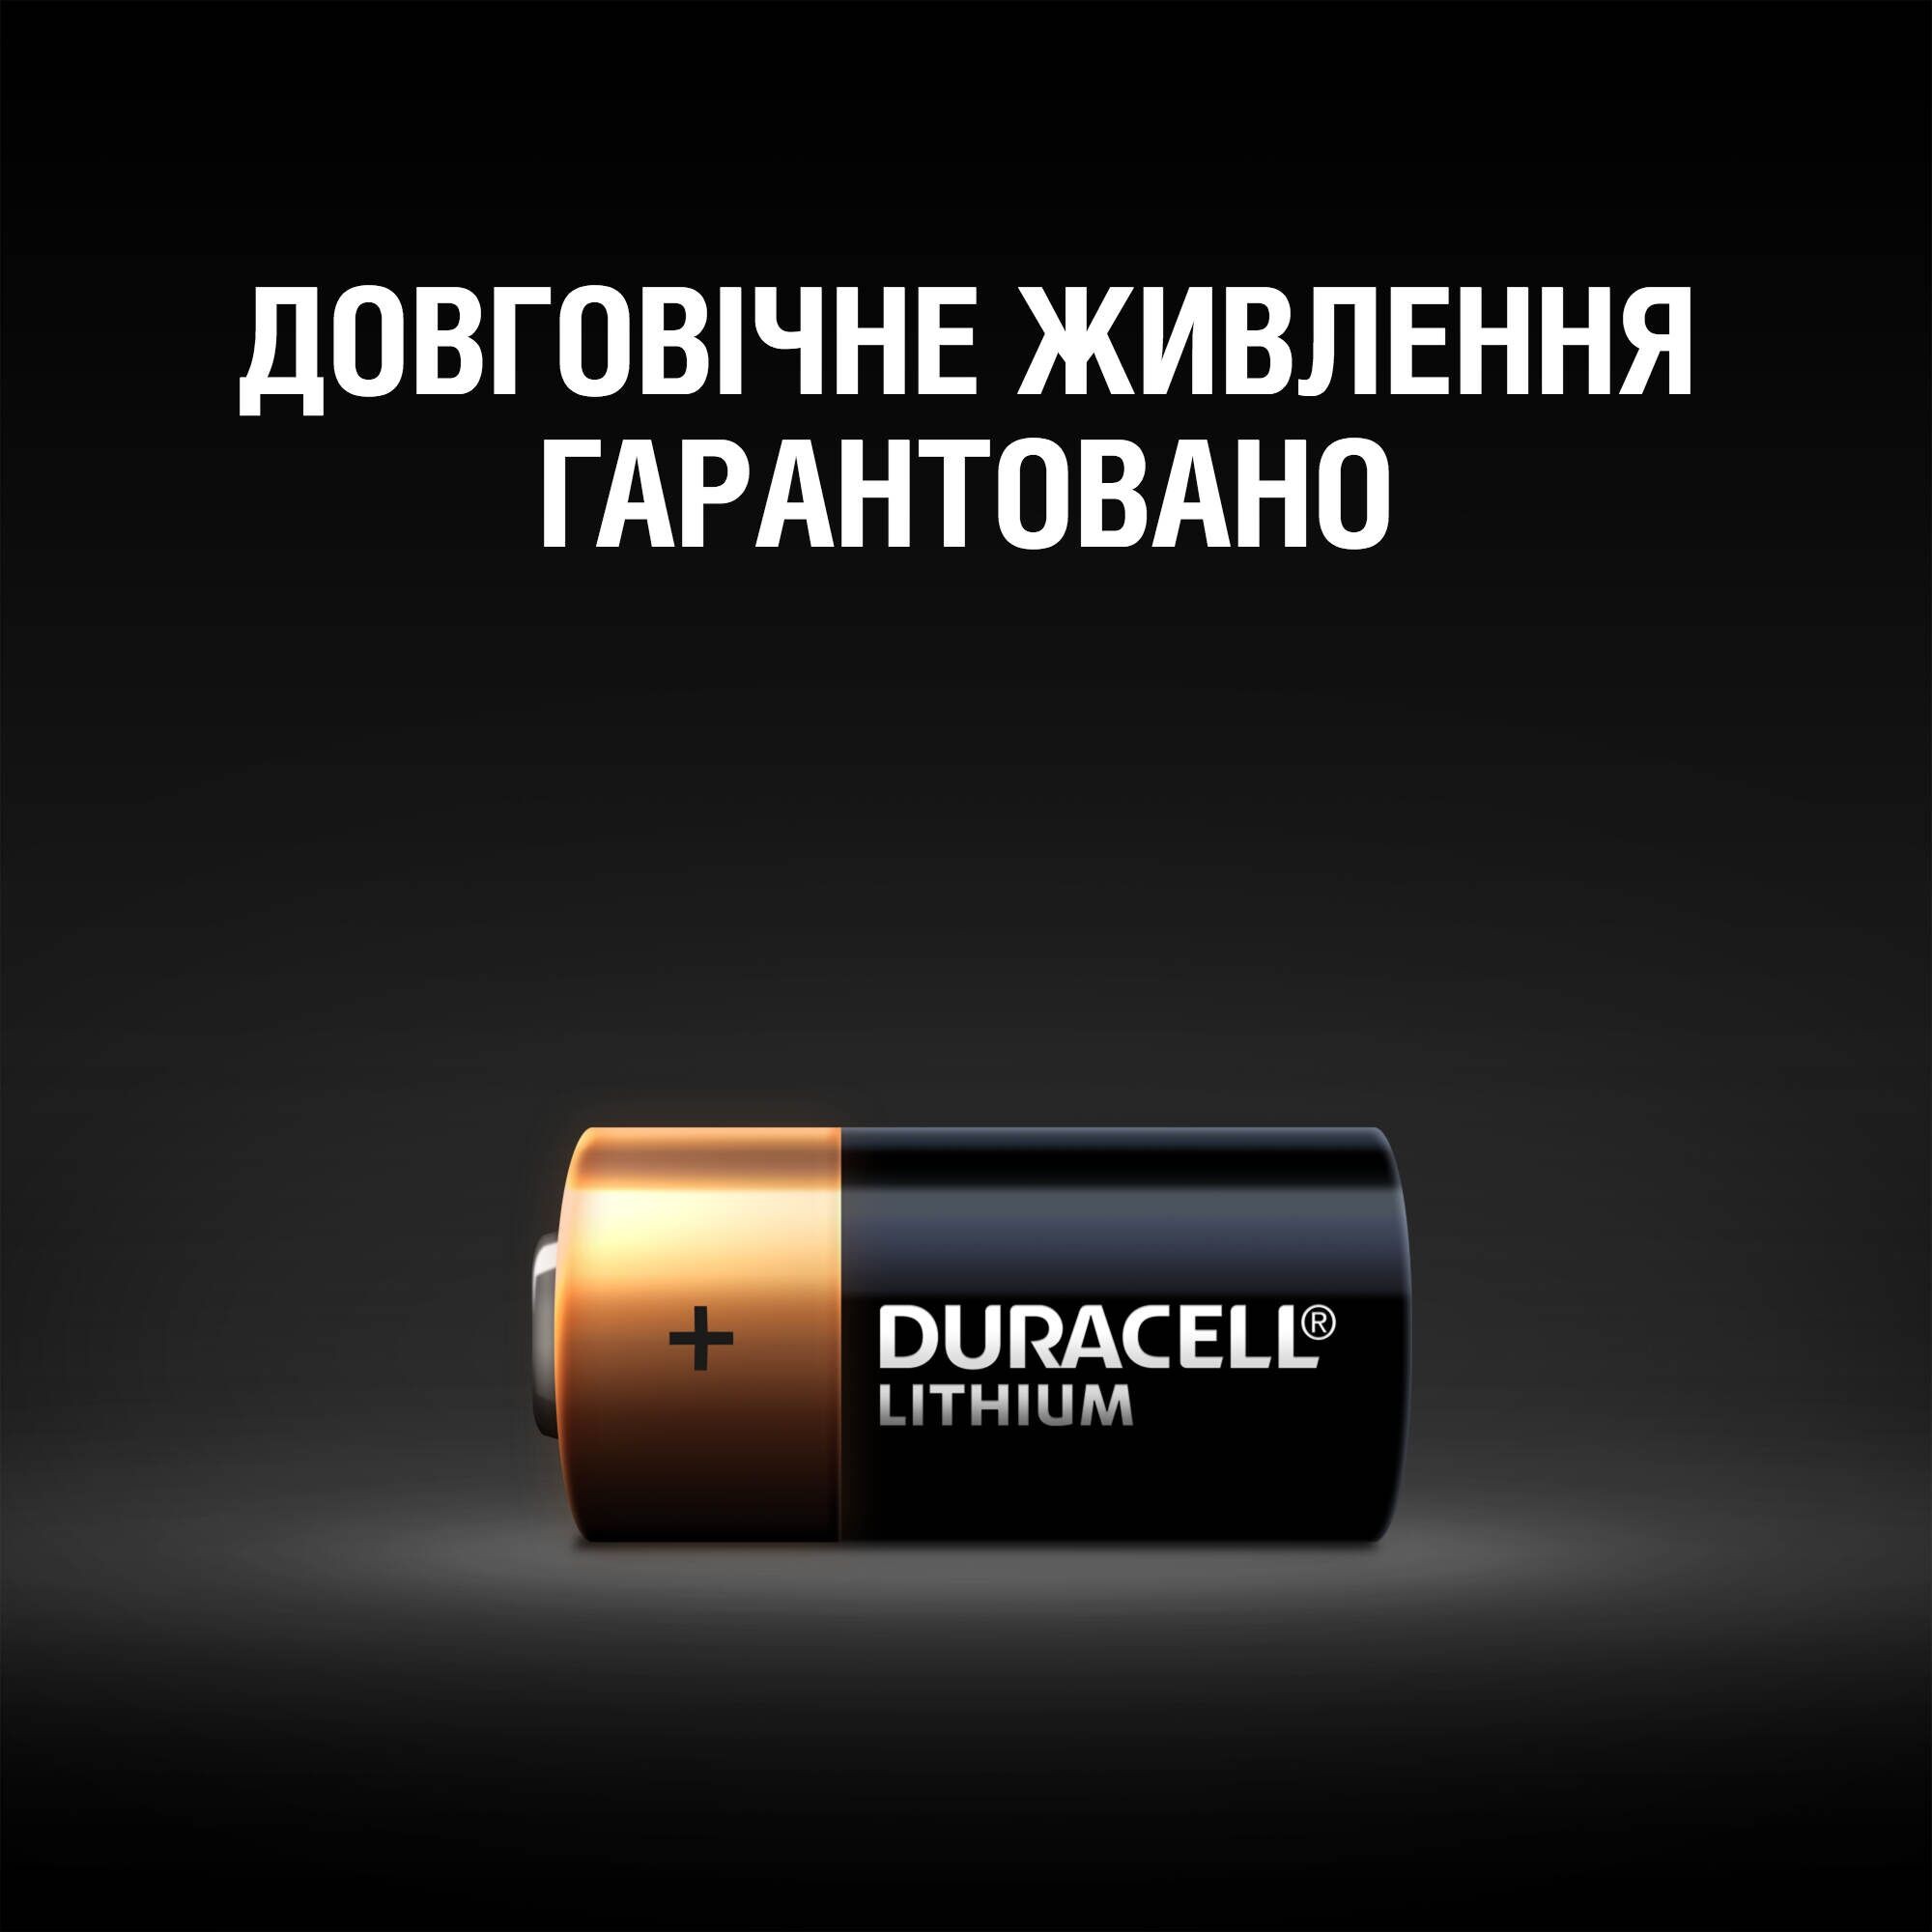 продаём Duracell CR 123 / DL 123 * 2 (5002979) в Украине - фото 4